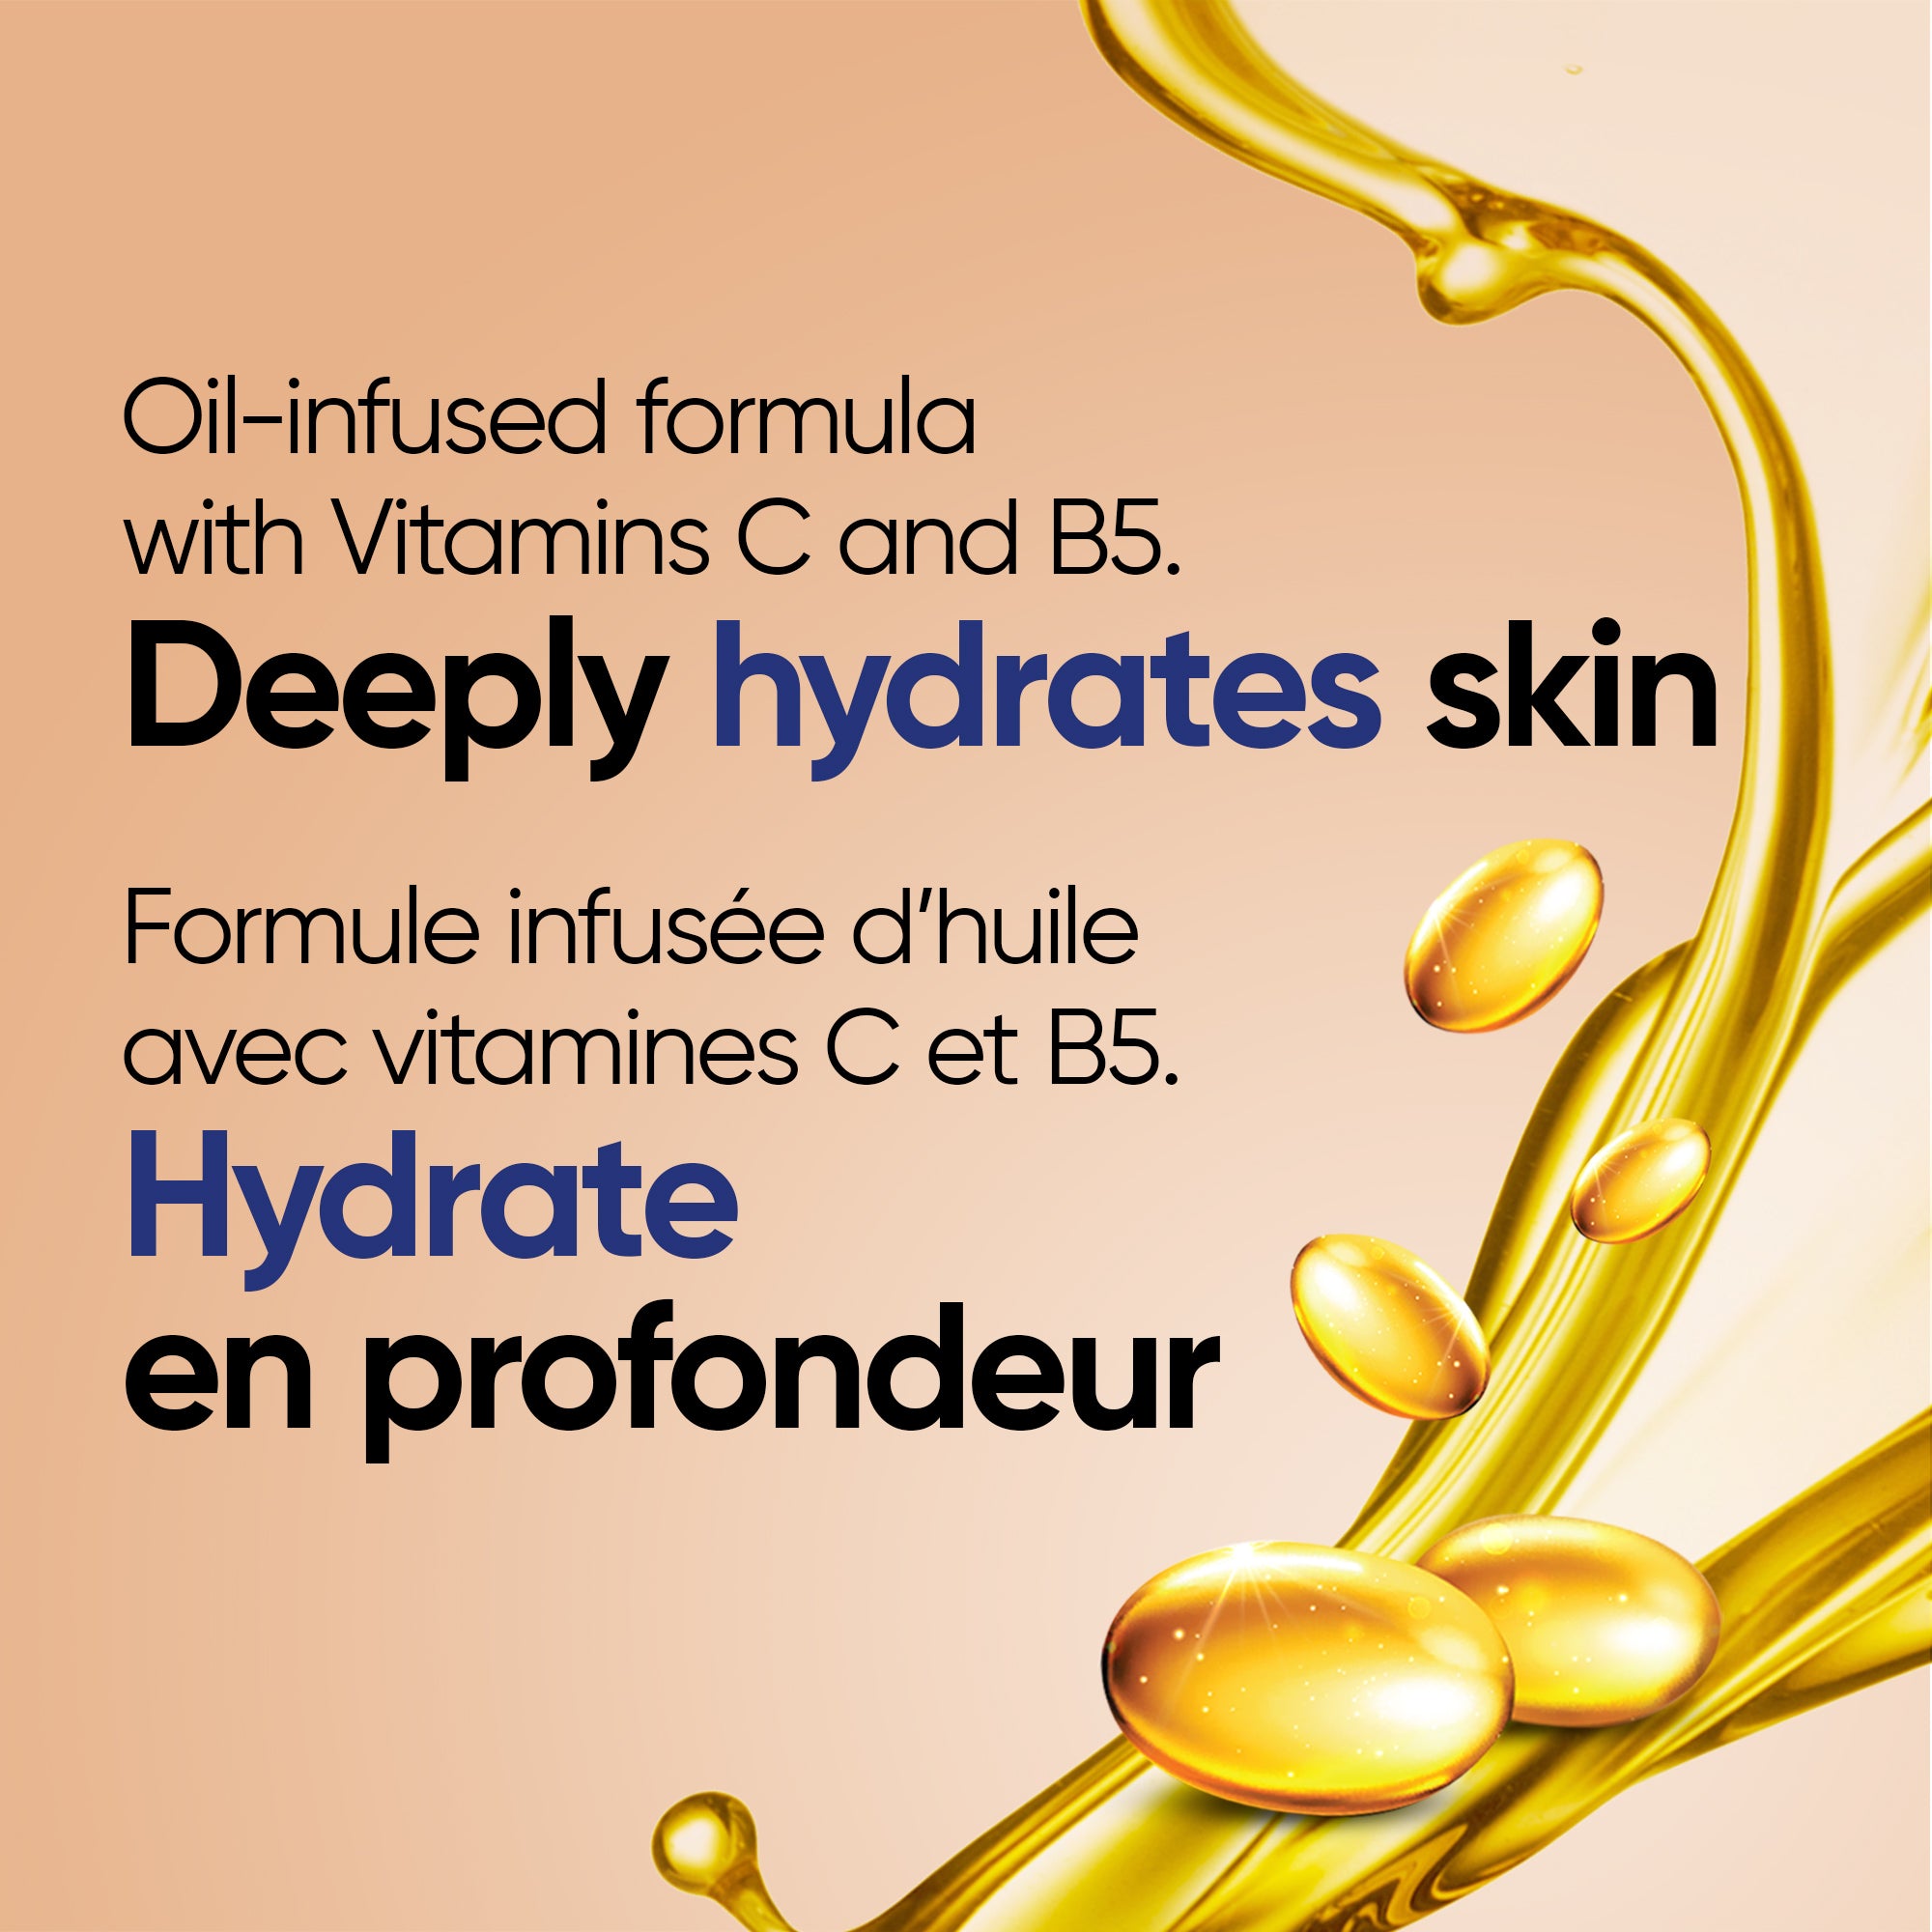 English: Oil-Infused formula, with Vitamins C and B5. Deeply hydrates skin Français: Formule enrichie d’huile, avec vitamines C et B5. Hydrate la peau en profondeur